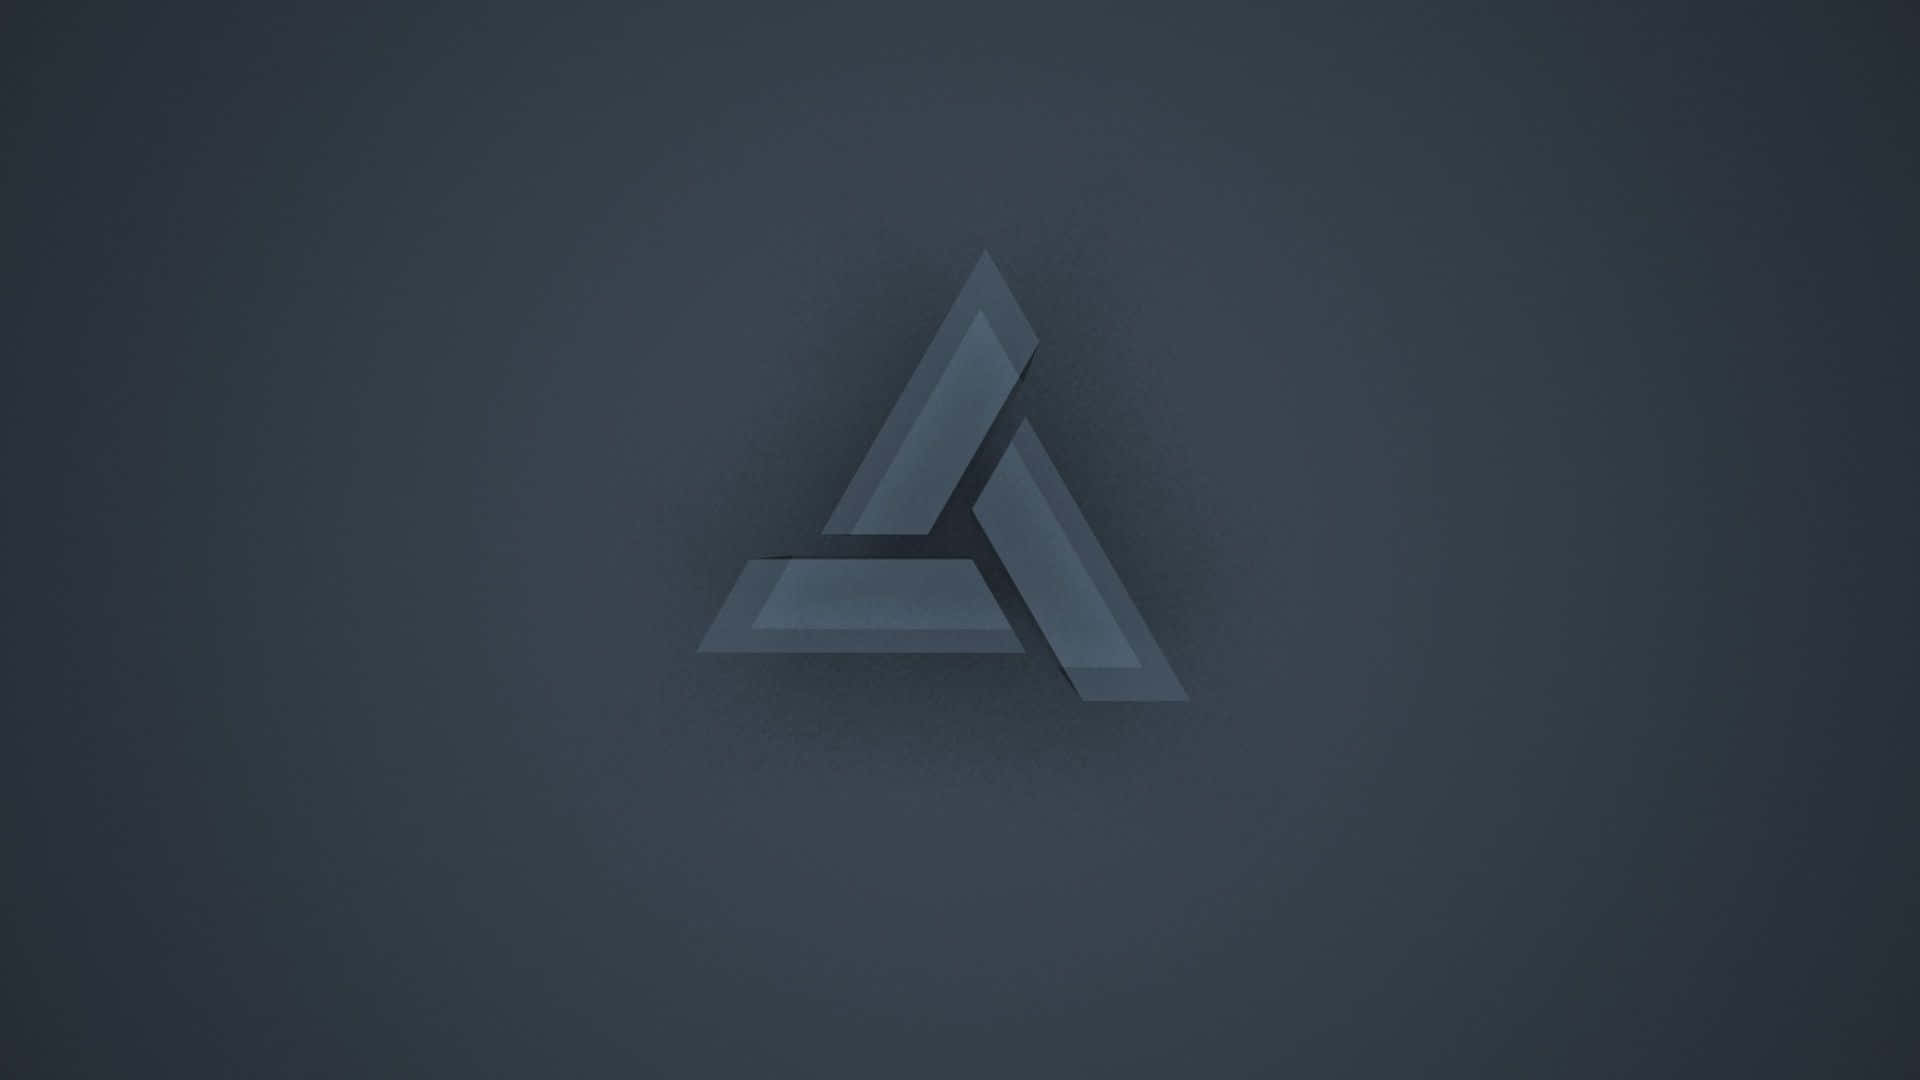 Abstergo Industries - Logo and Home Screen Wallpaper Wallpaper